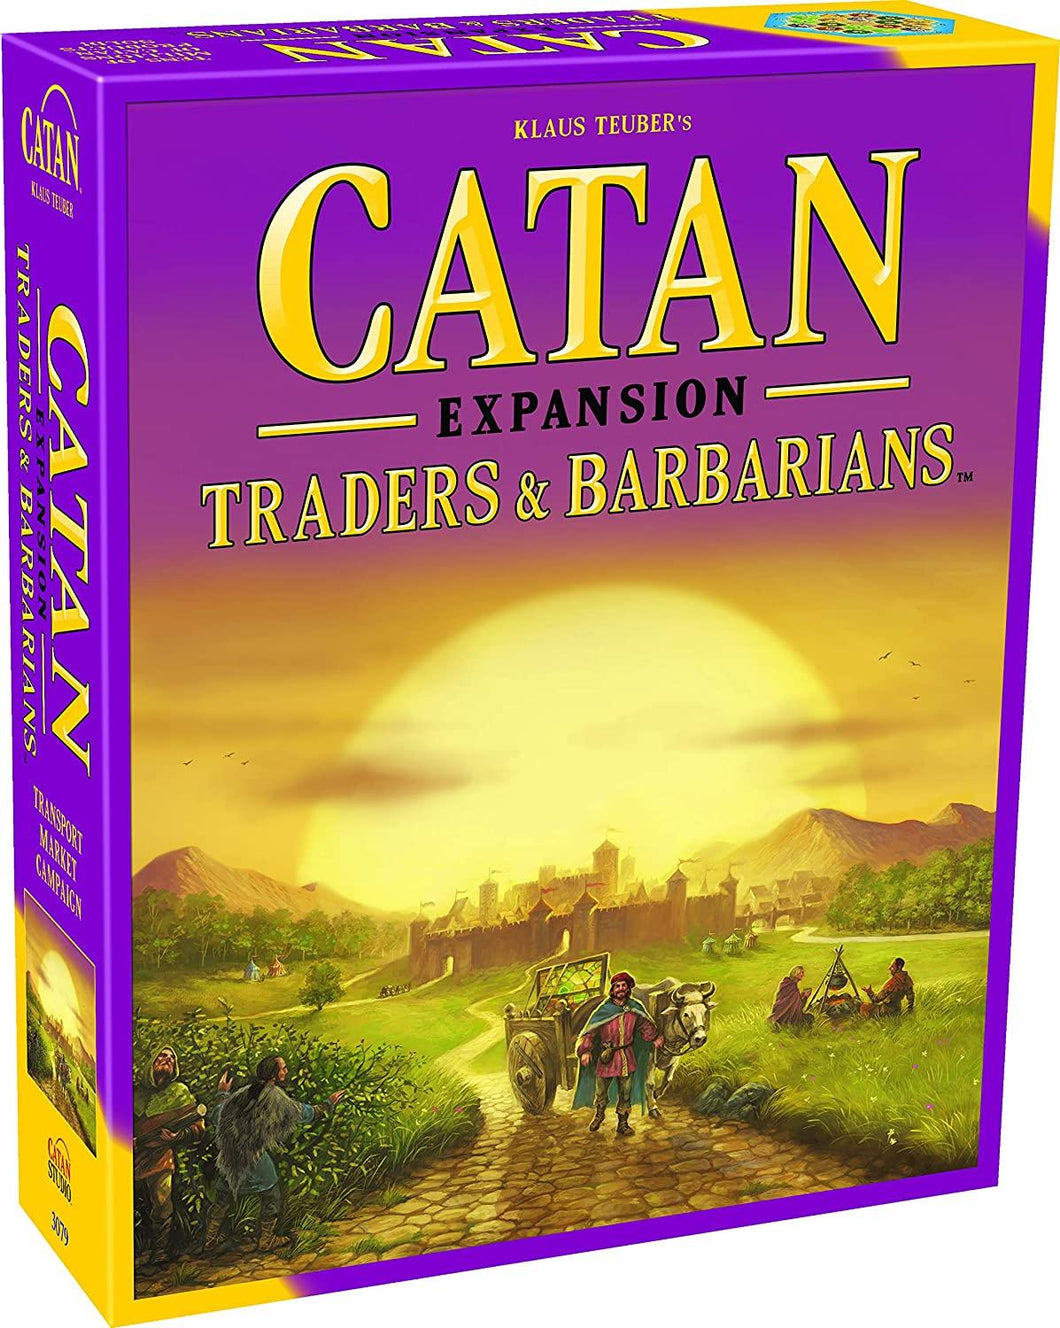 Traders & Barbarians Catan 5th Expansion